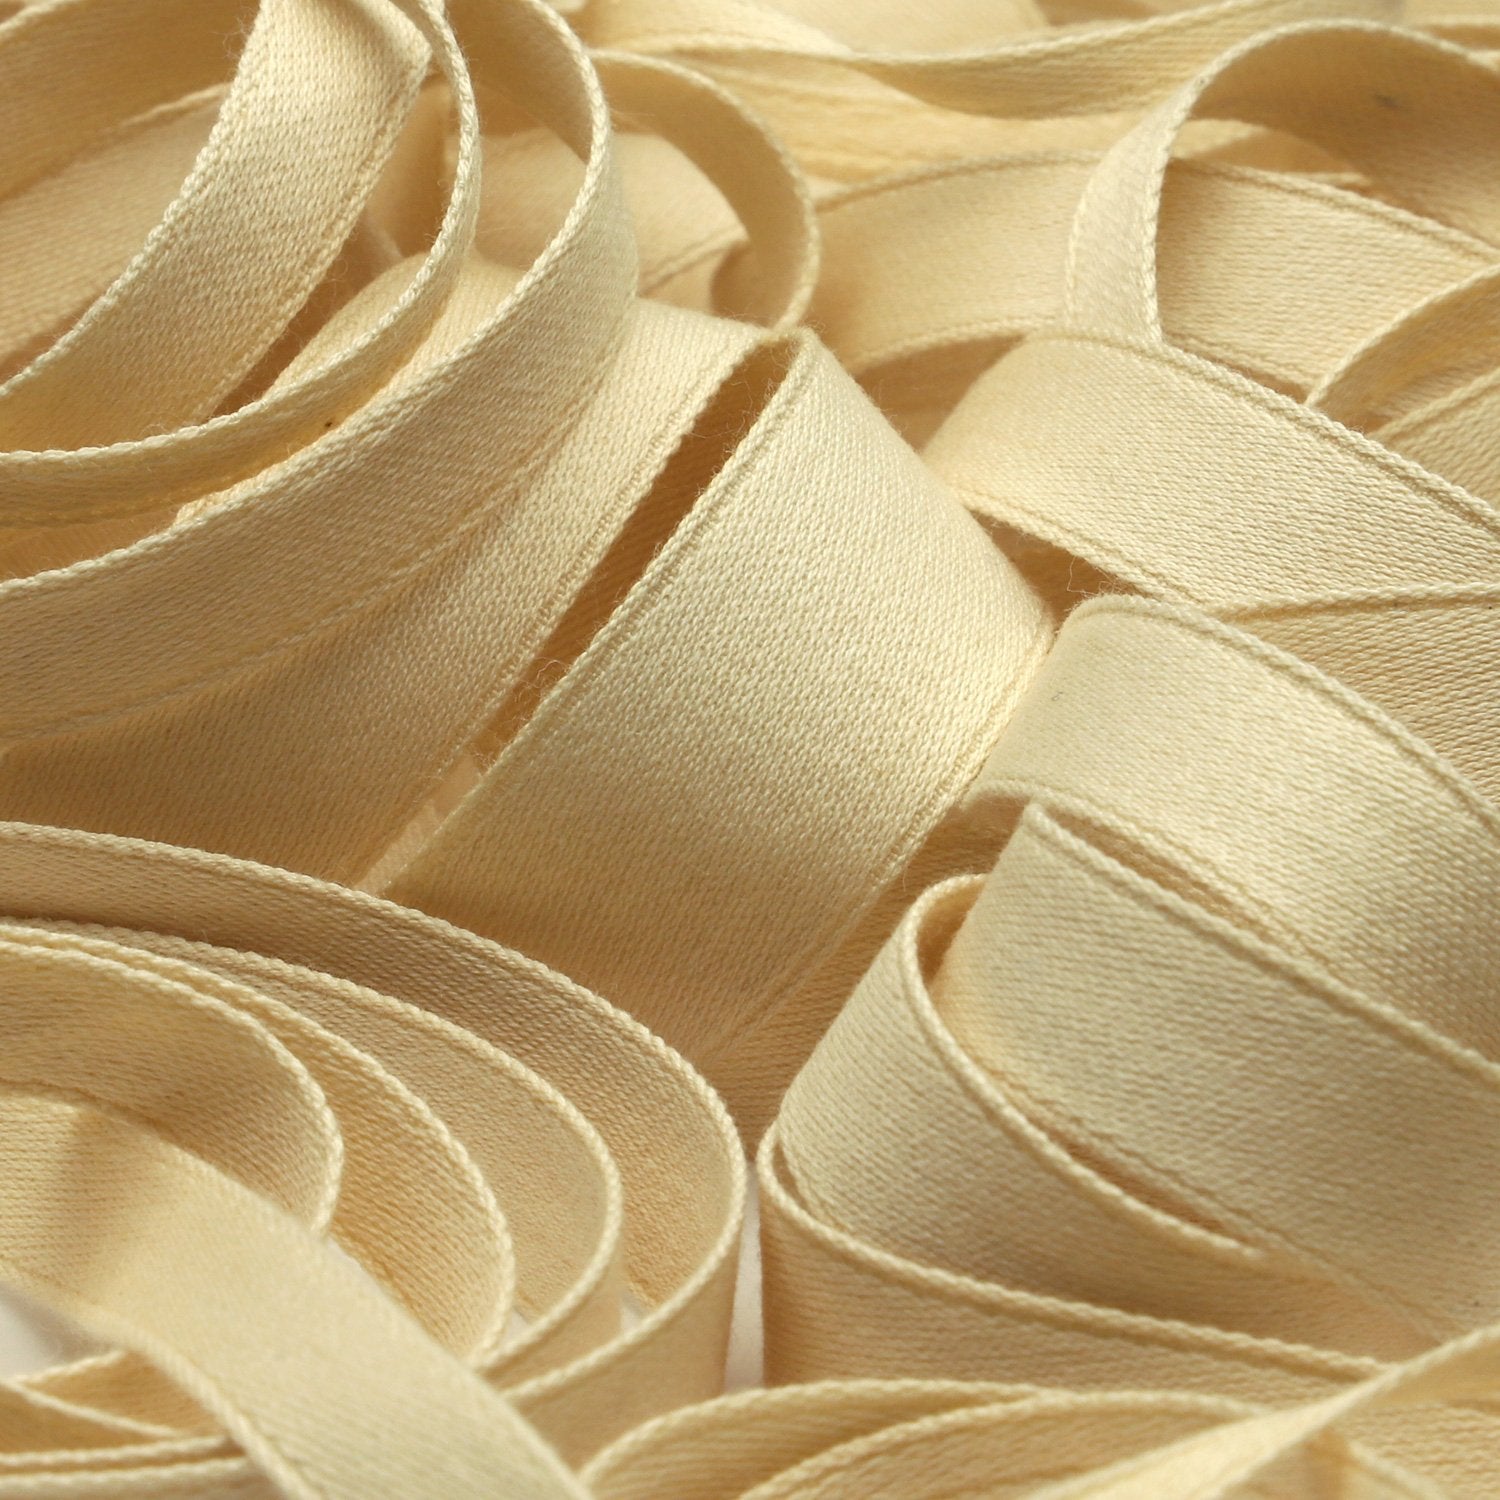 FUJIYAMA RIBBON Organic Cotton Double-Face Satin Ribbon 3mm Ecru 9.14 Meters Roll